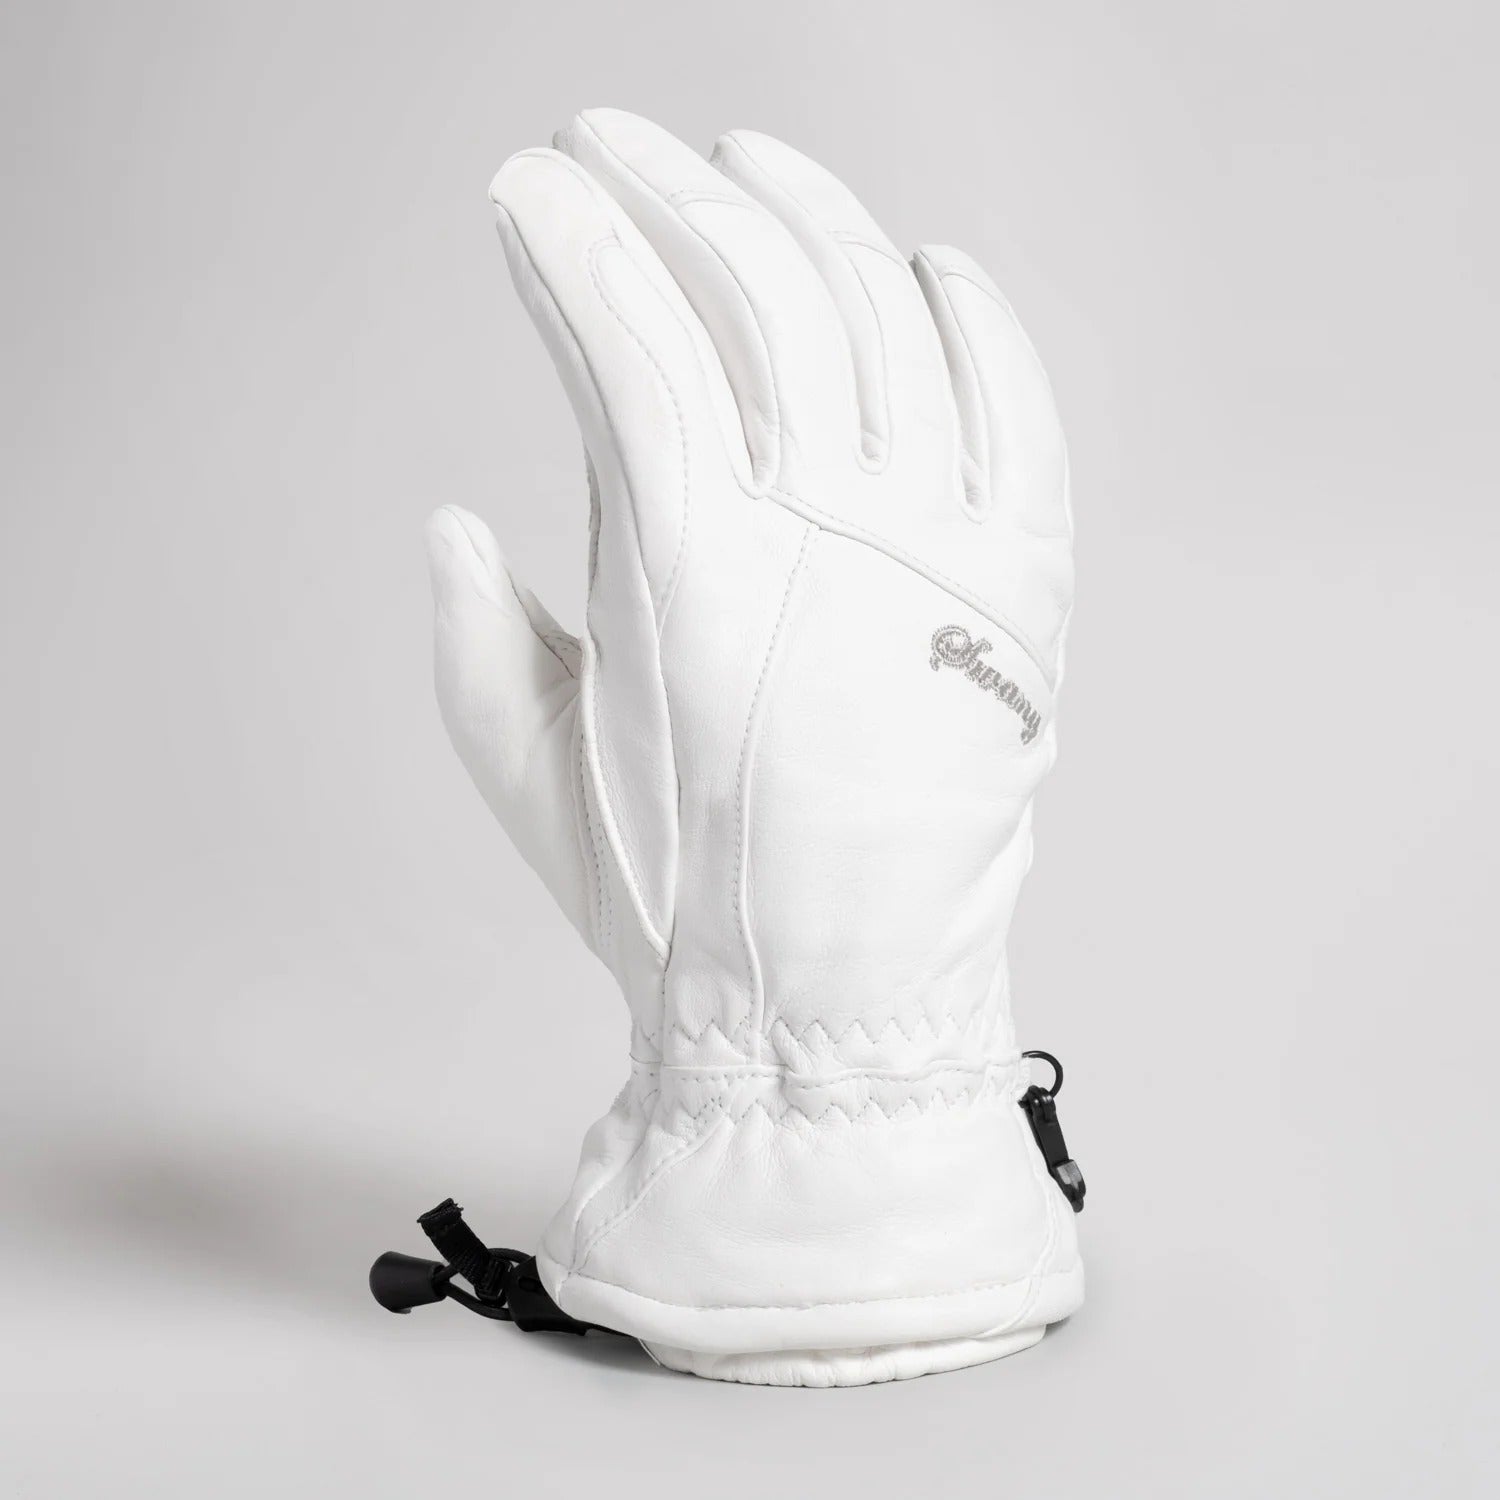 La Posh Ladies Ski Glove 